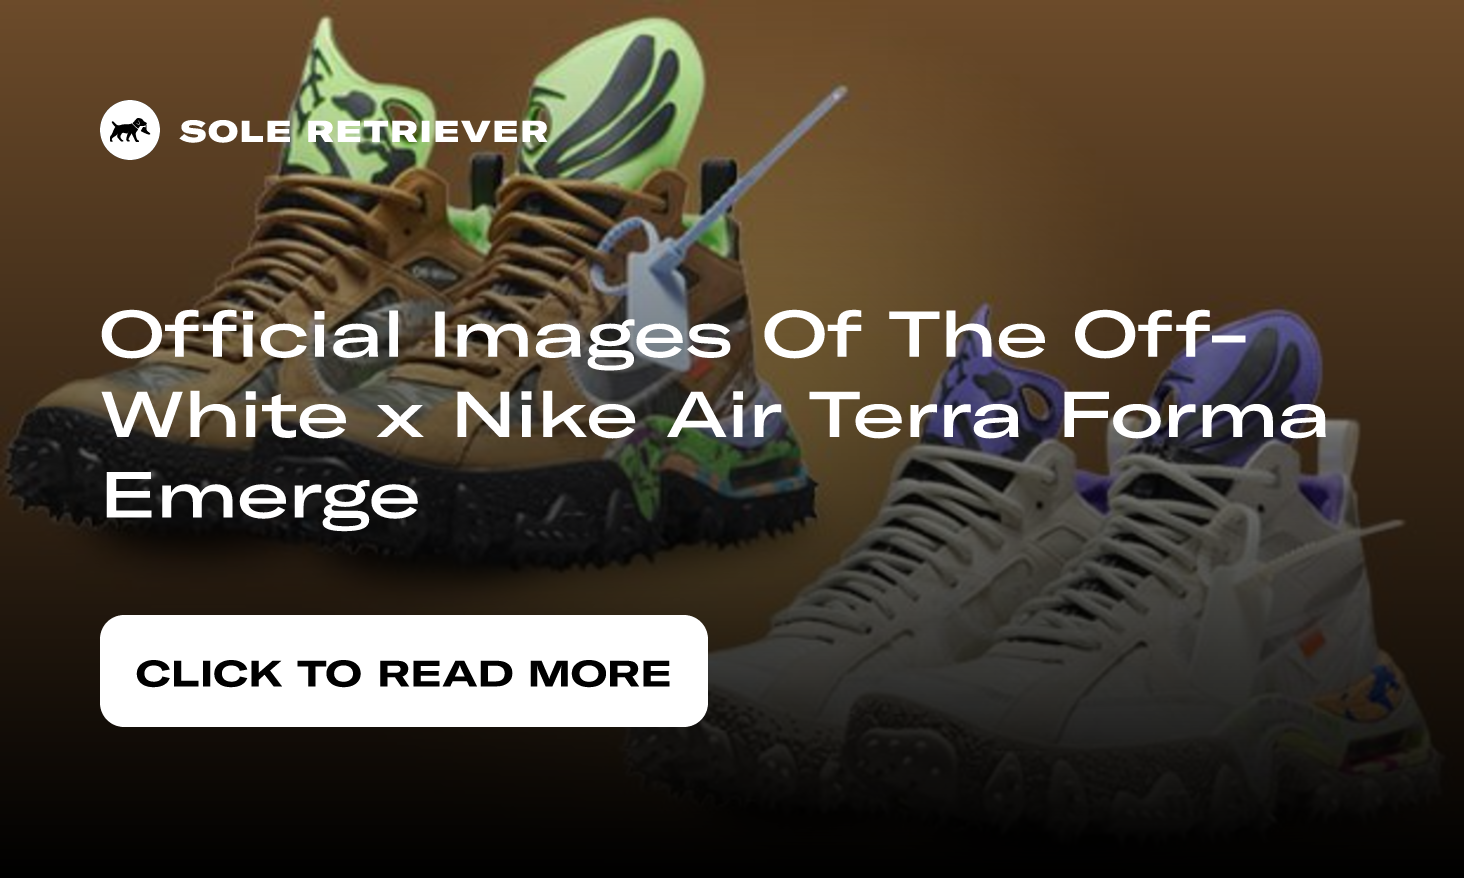 Virgil Abloh Designed The Upcoming Off-White x Nike Air Terra